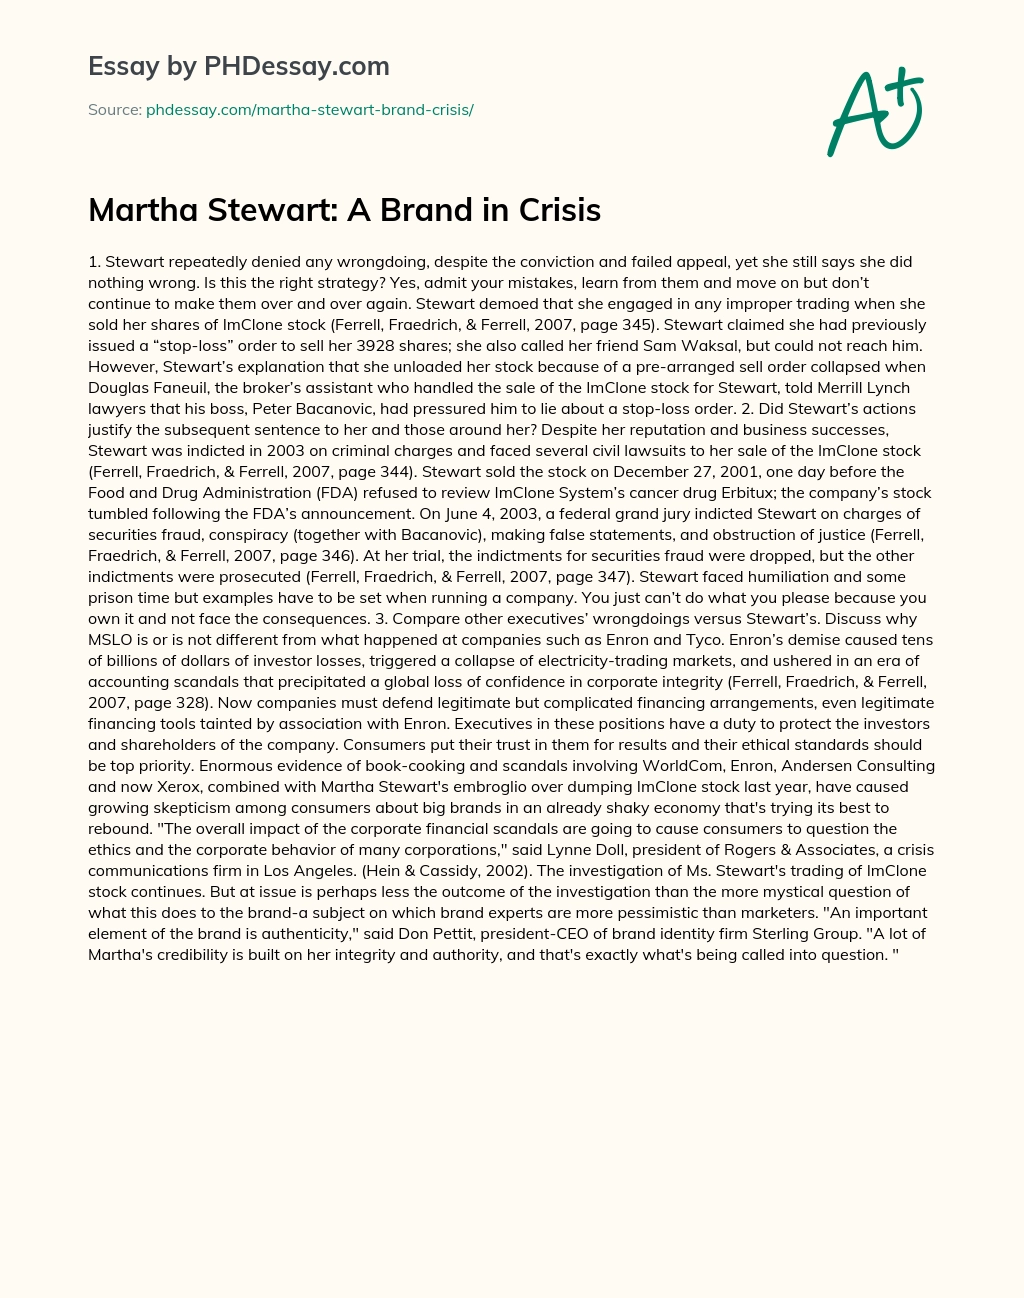 Martha Stewart: A Brand in Crisis essay